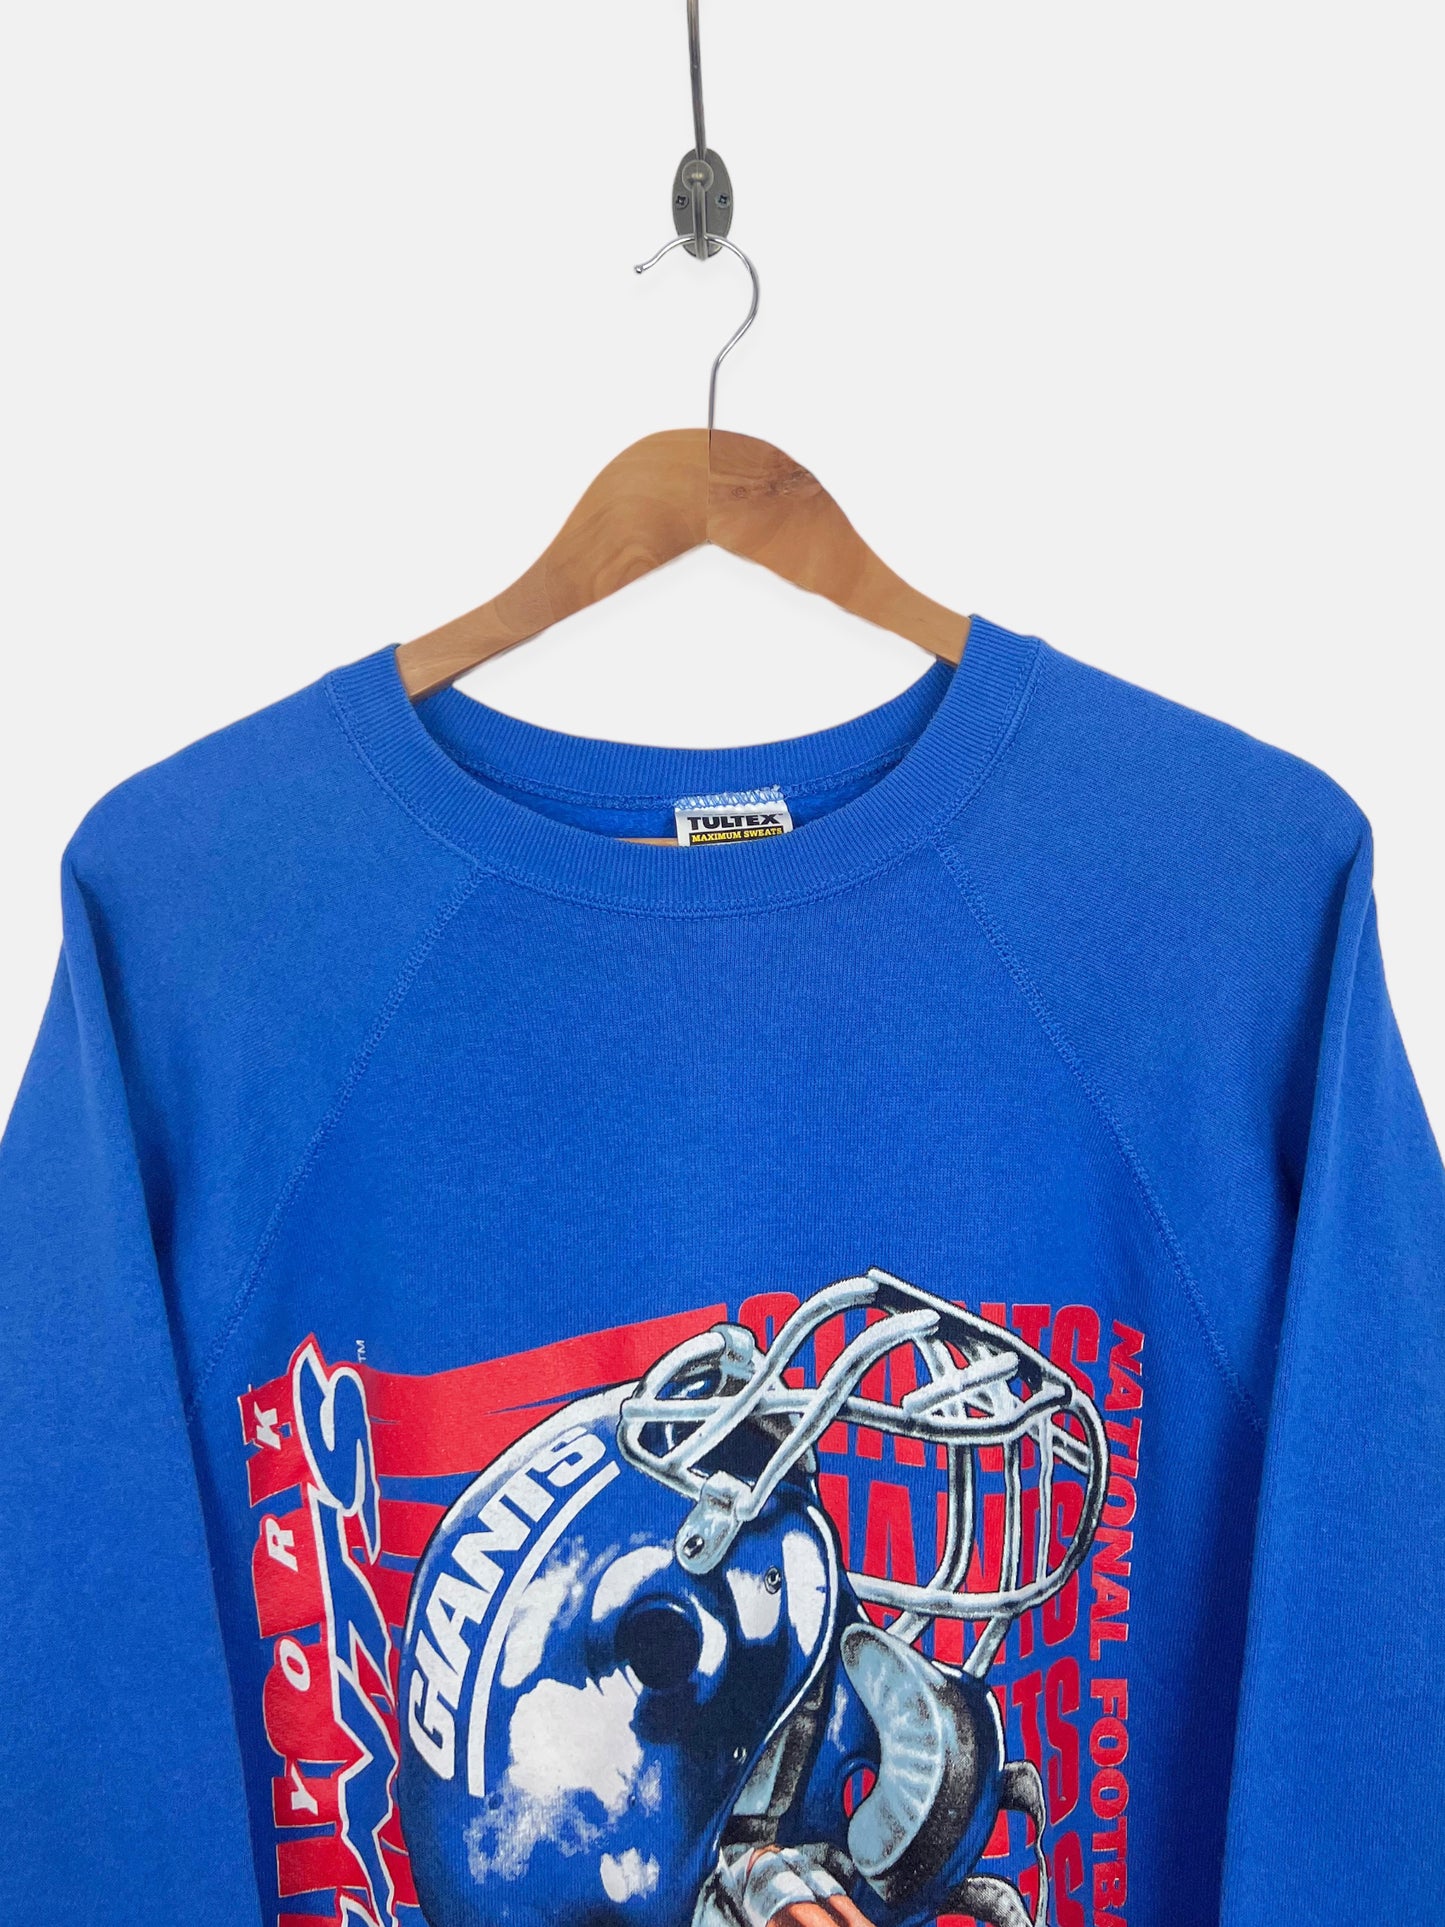 1996 New York Giants NFL USA Made Vintage Sweatshirt Size M